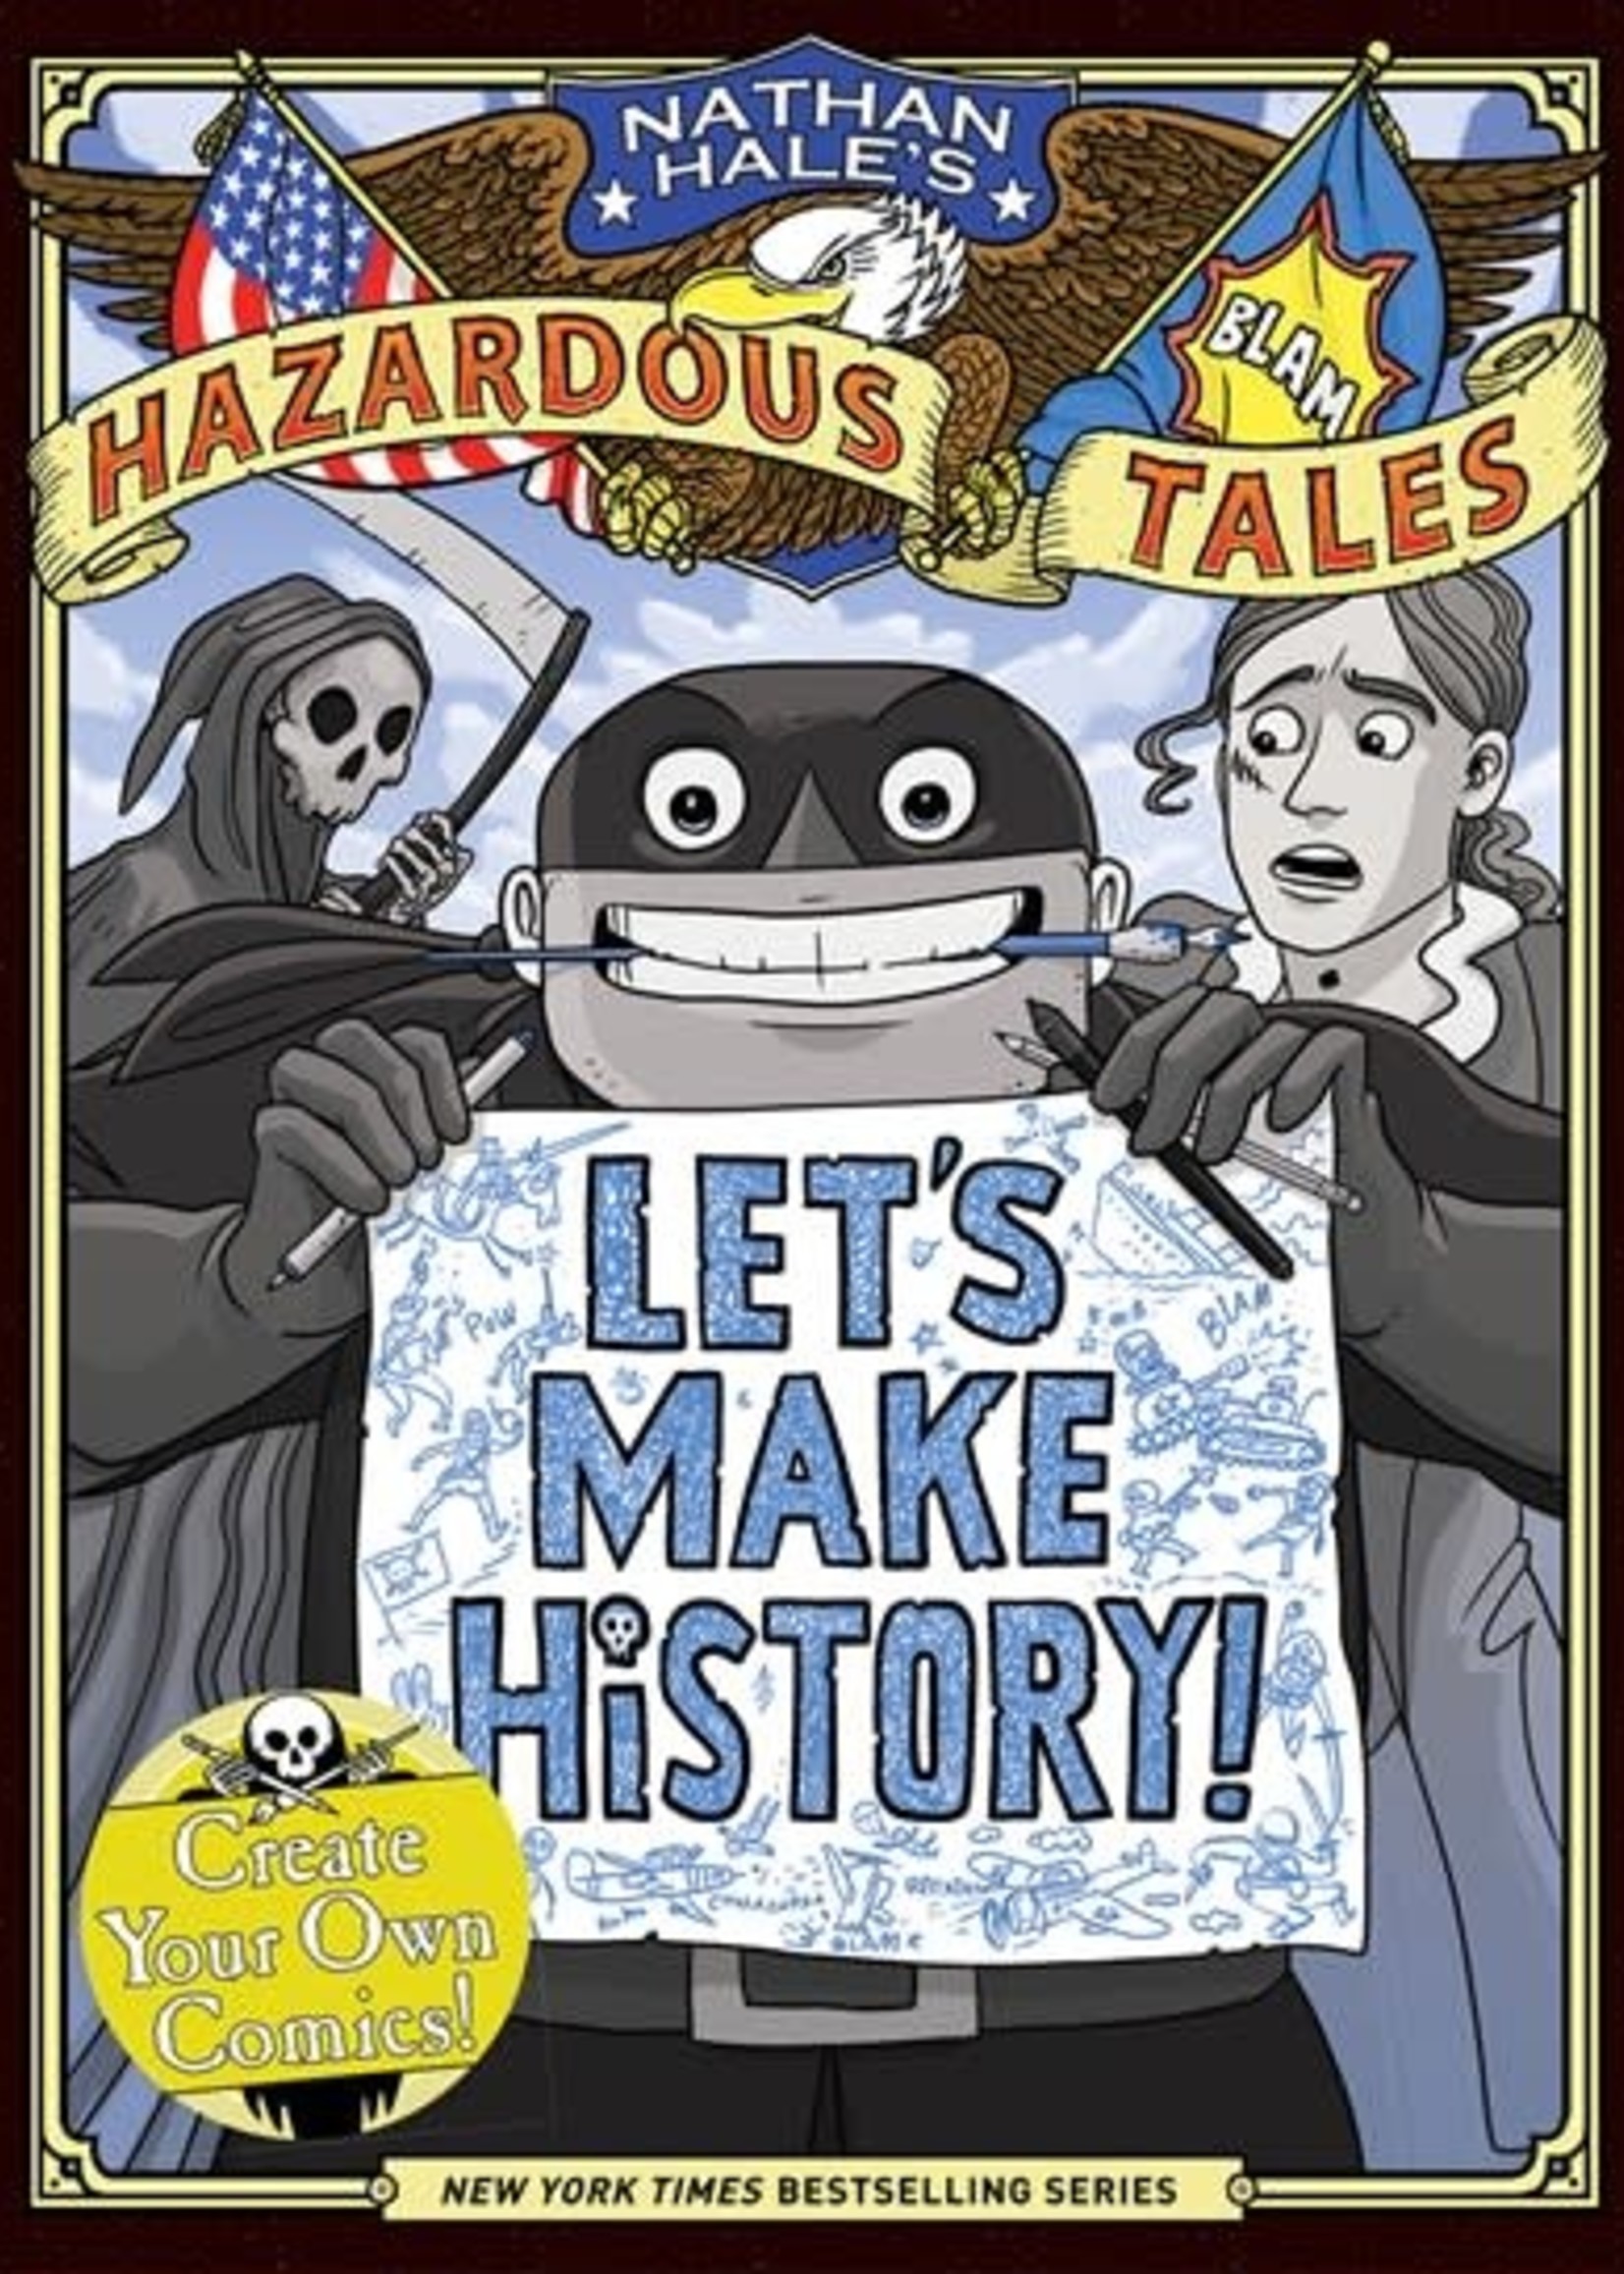 Nathan Hale's Hazardous Tales Let's Make History